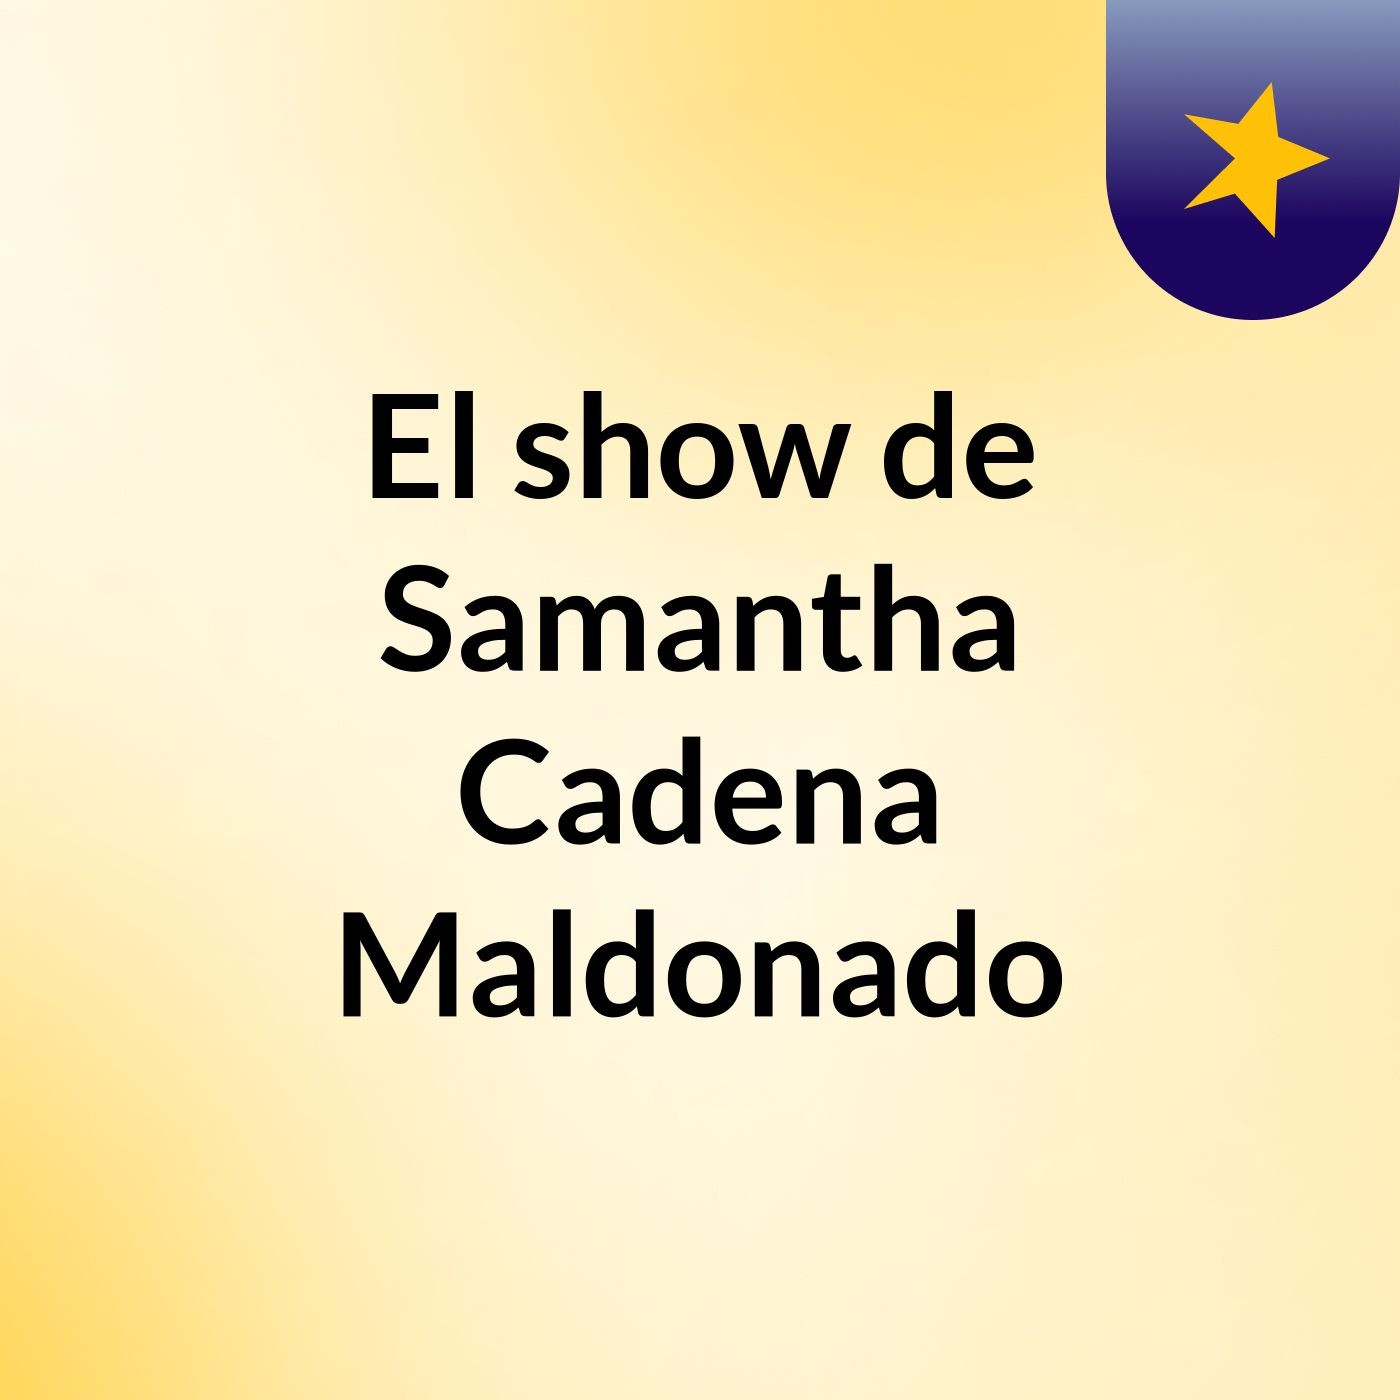 El show de Samantha Cadena Maldonado